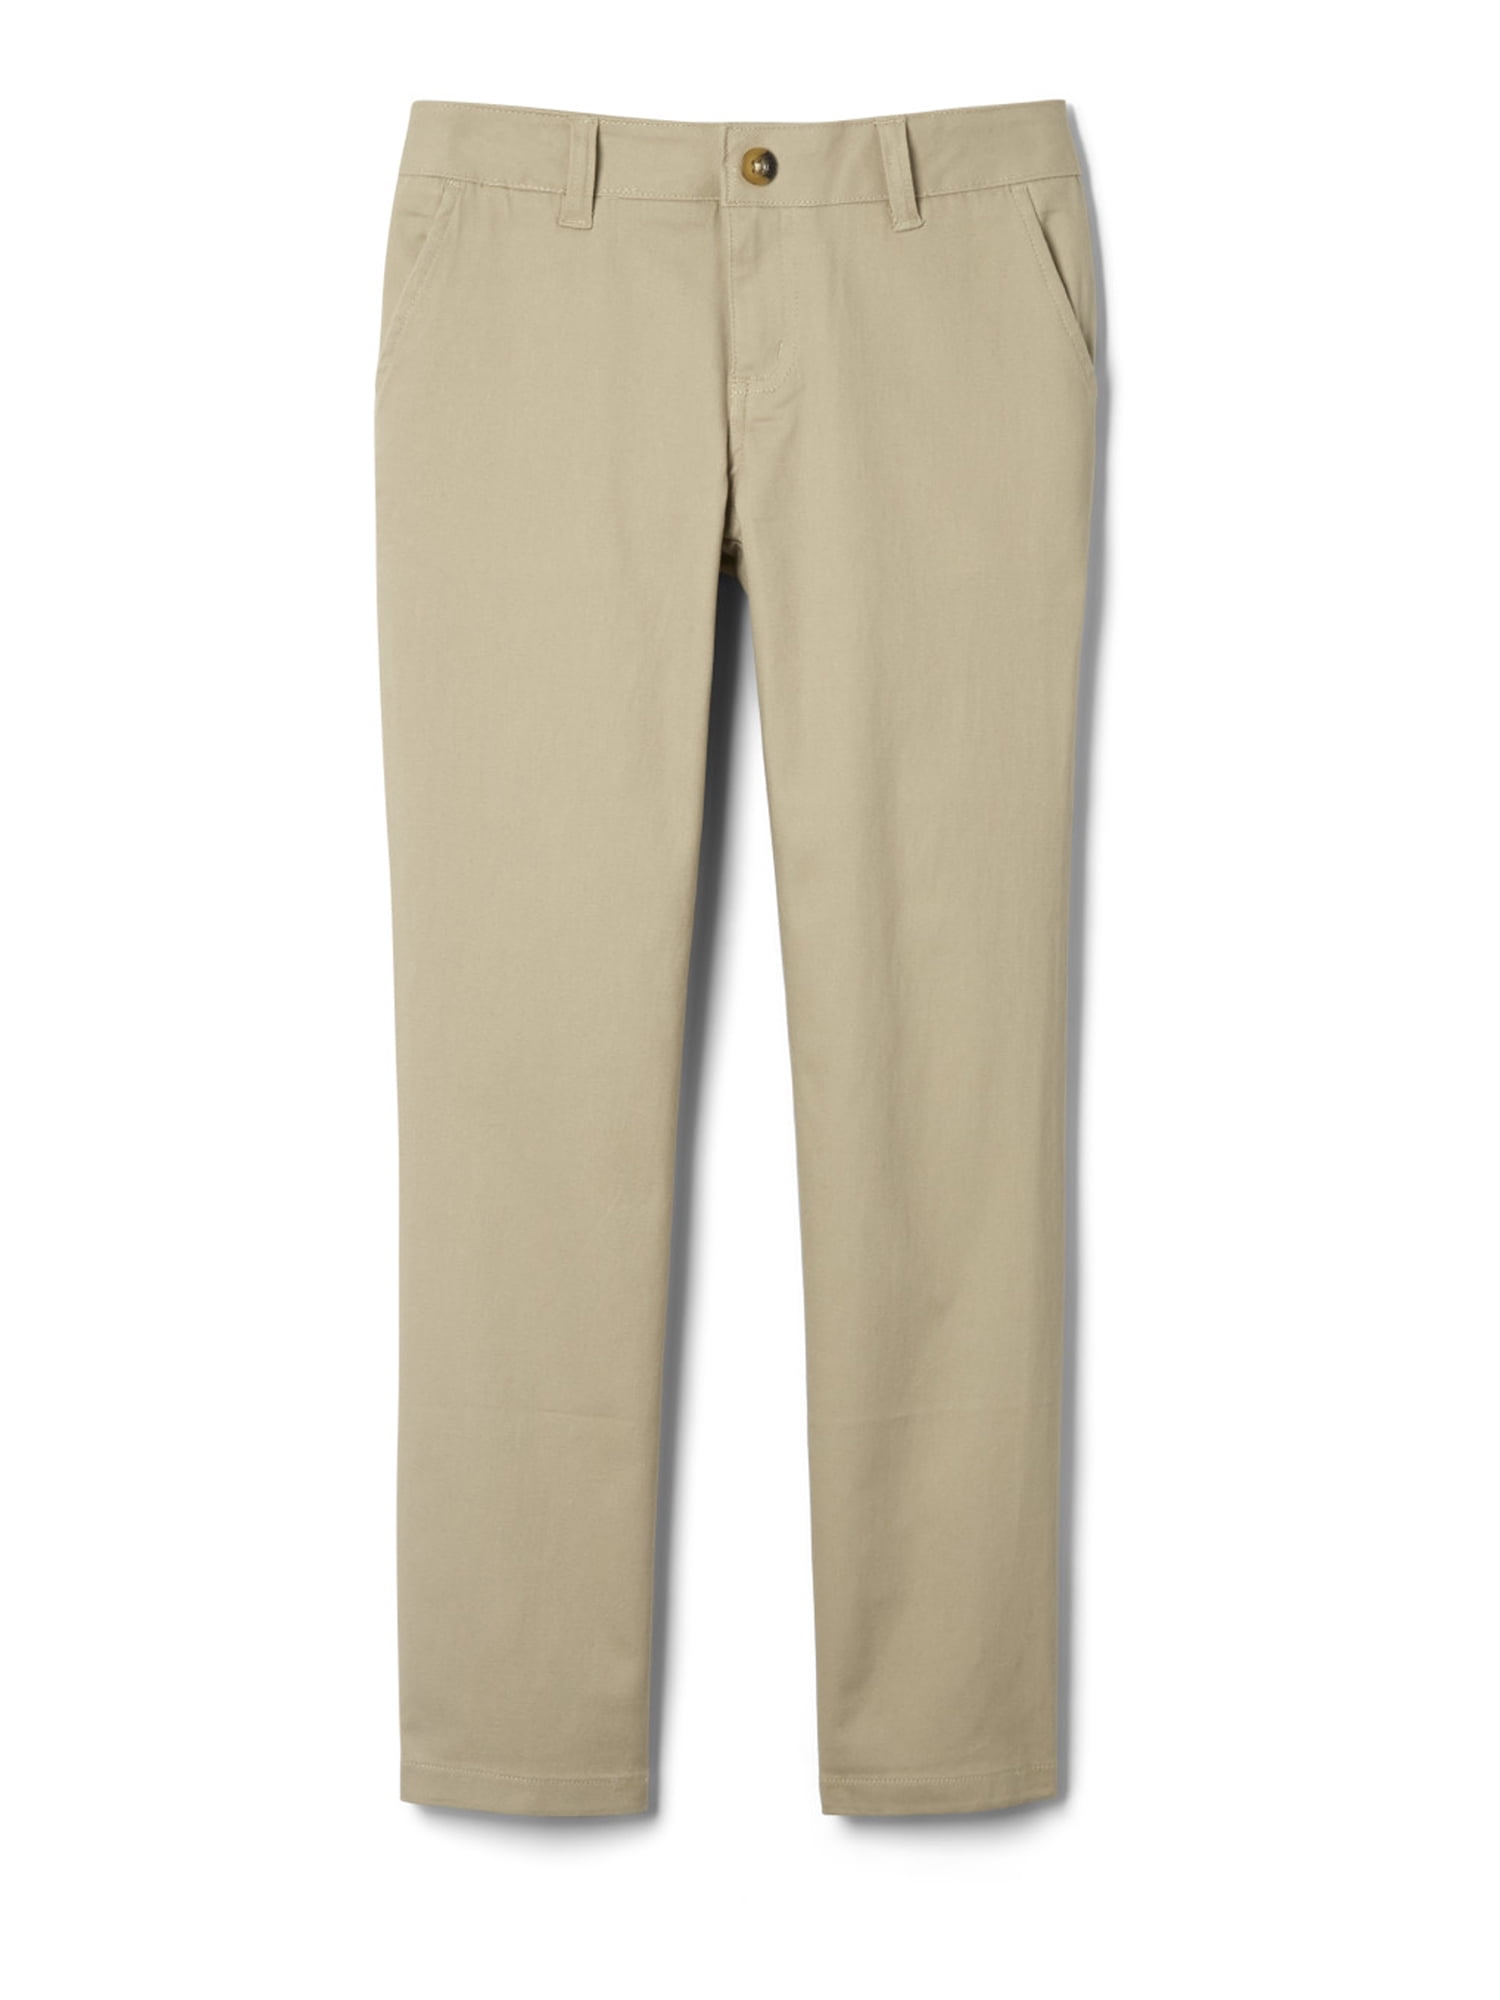 French Toast School Uniform Boys Slim Fit 5 Pocket Pants 